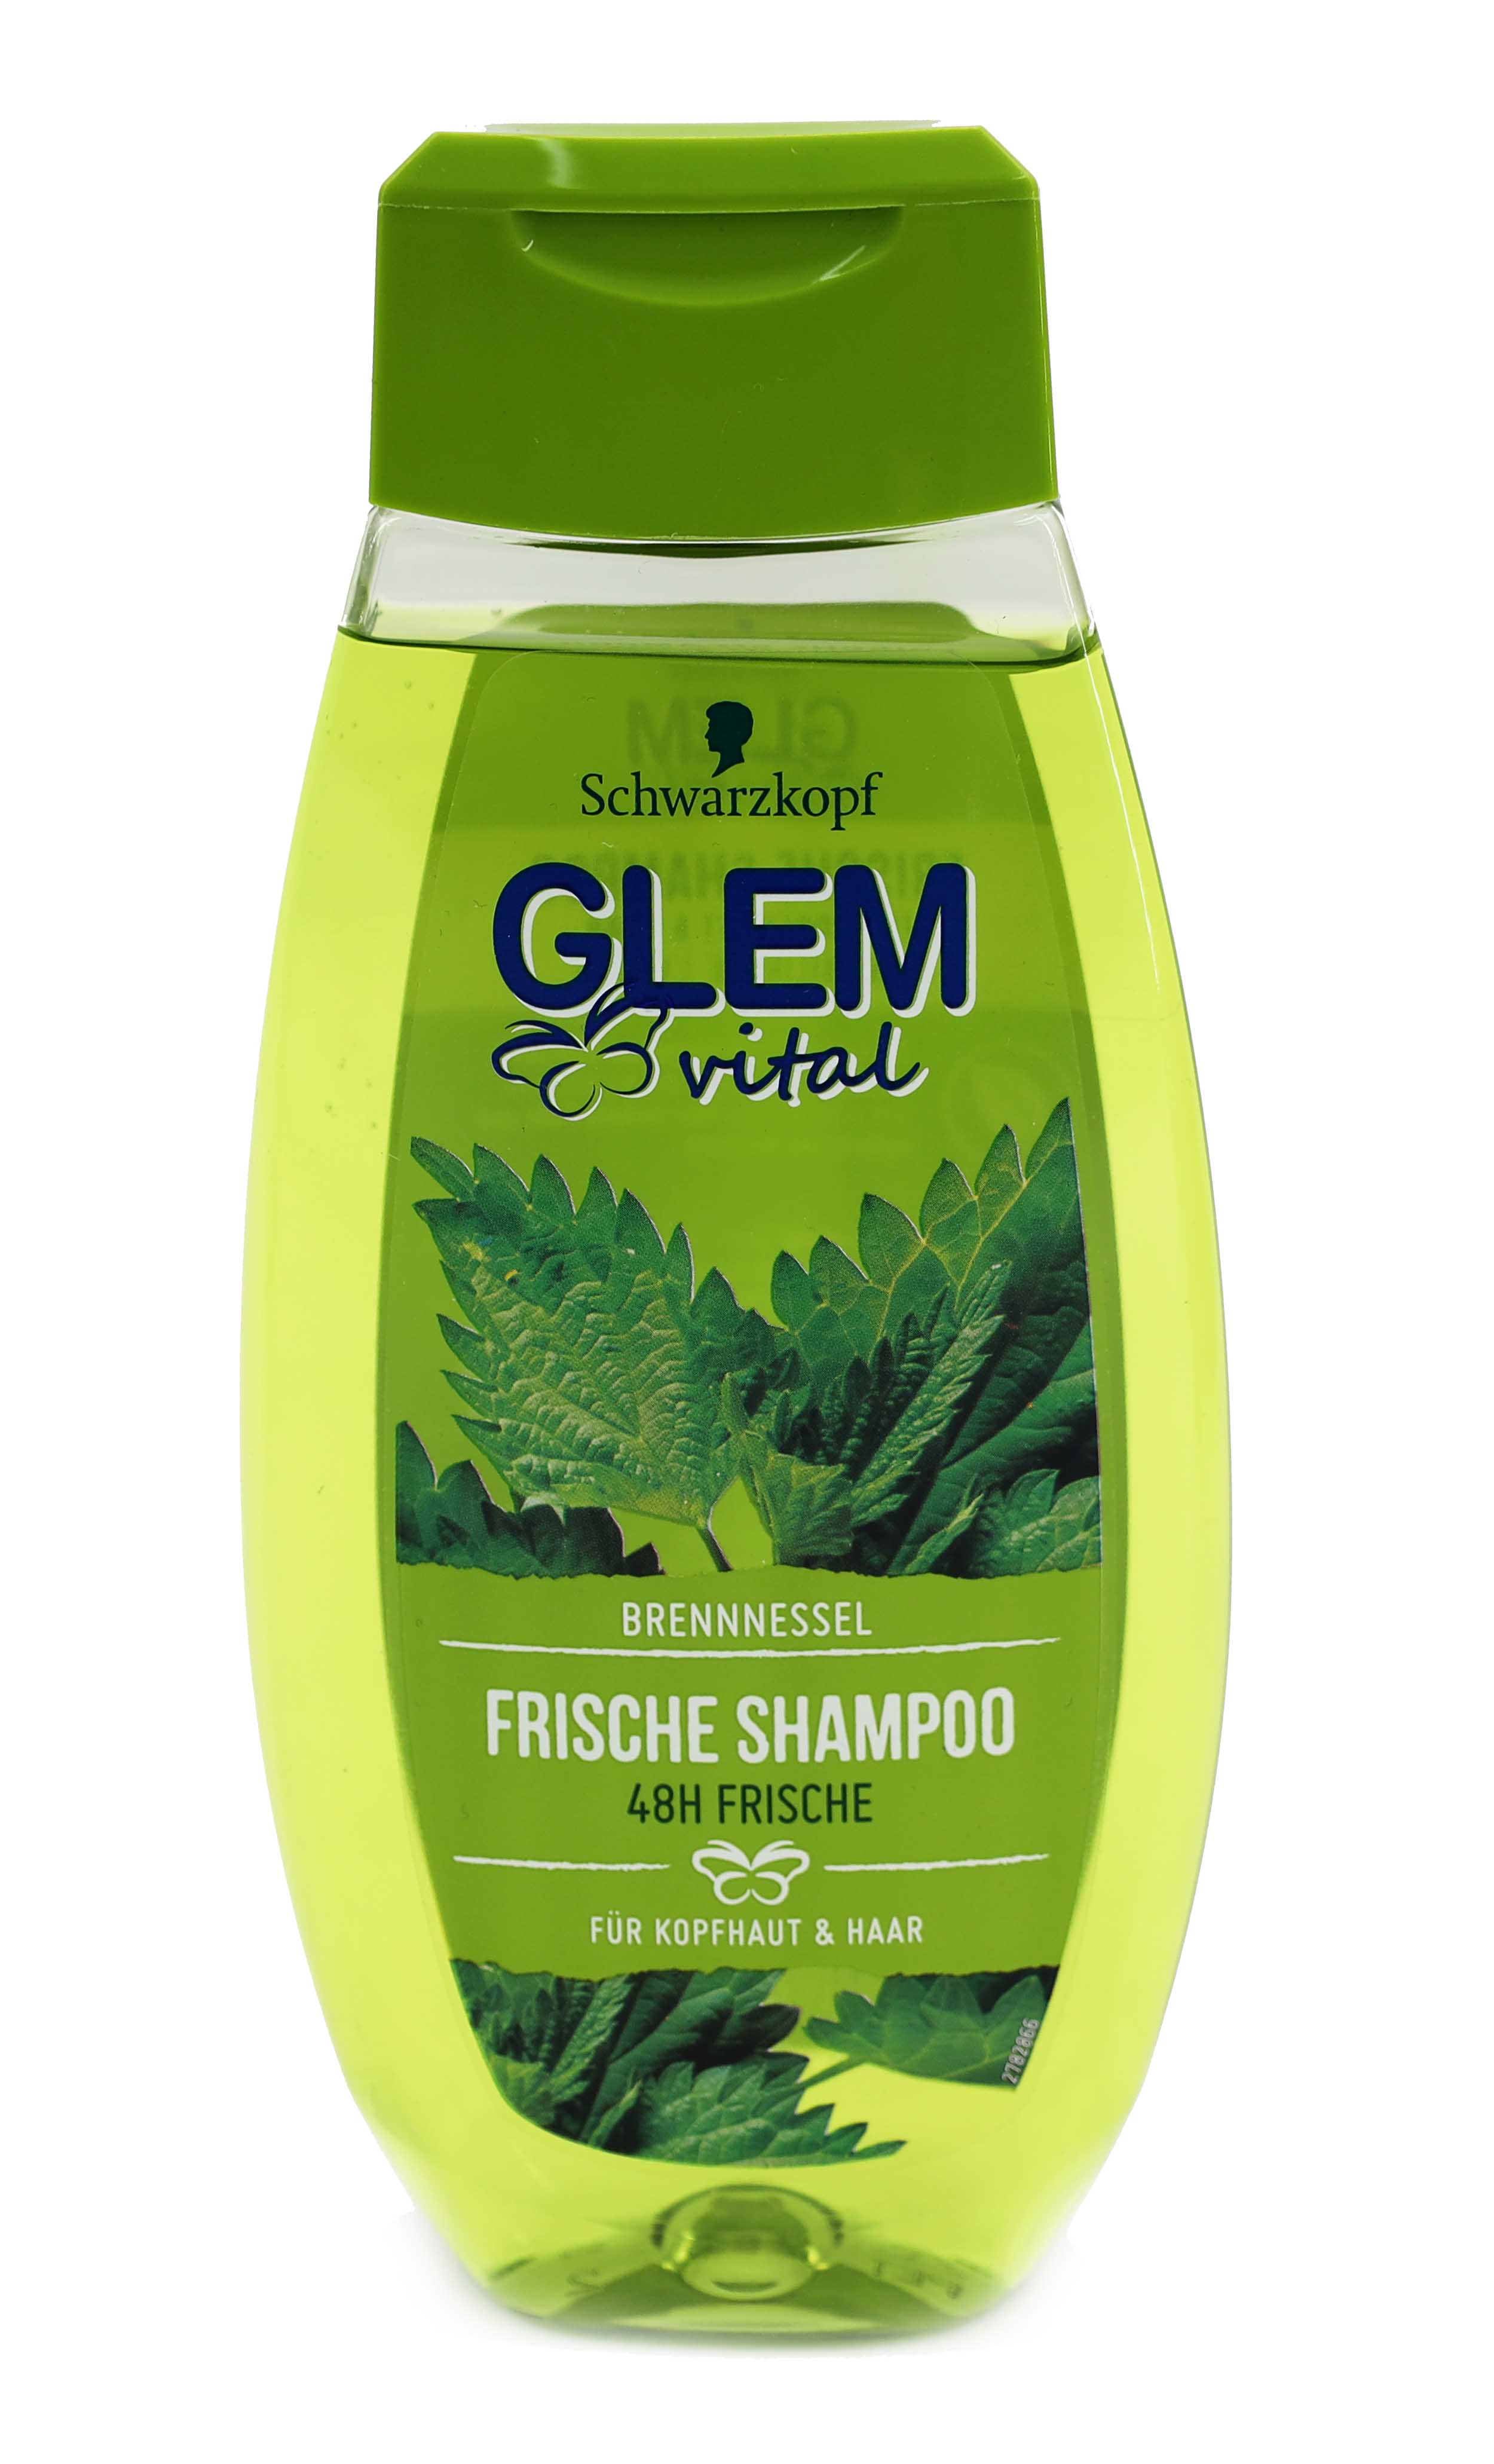 Glem vital Frische Shampoo Brennnessel 350ml